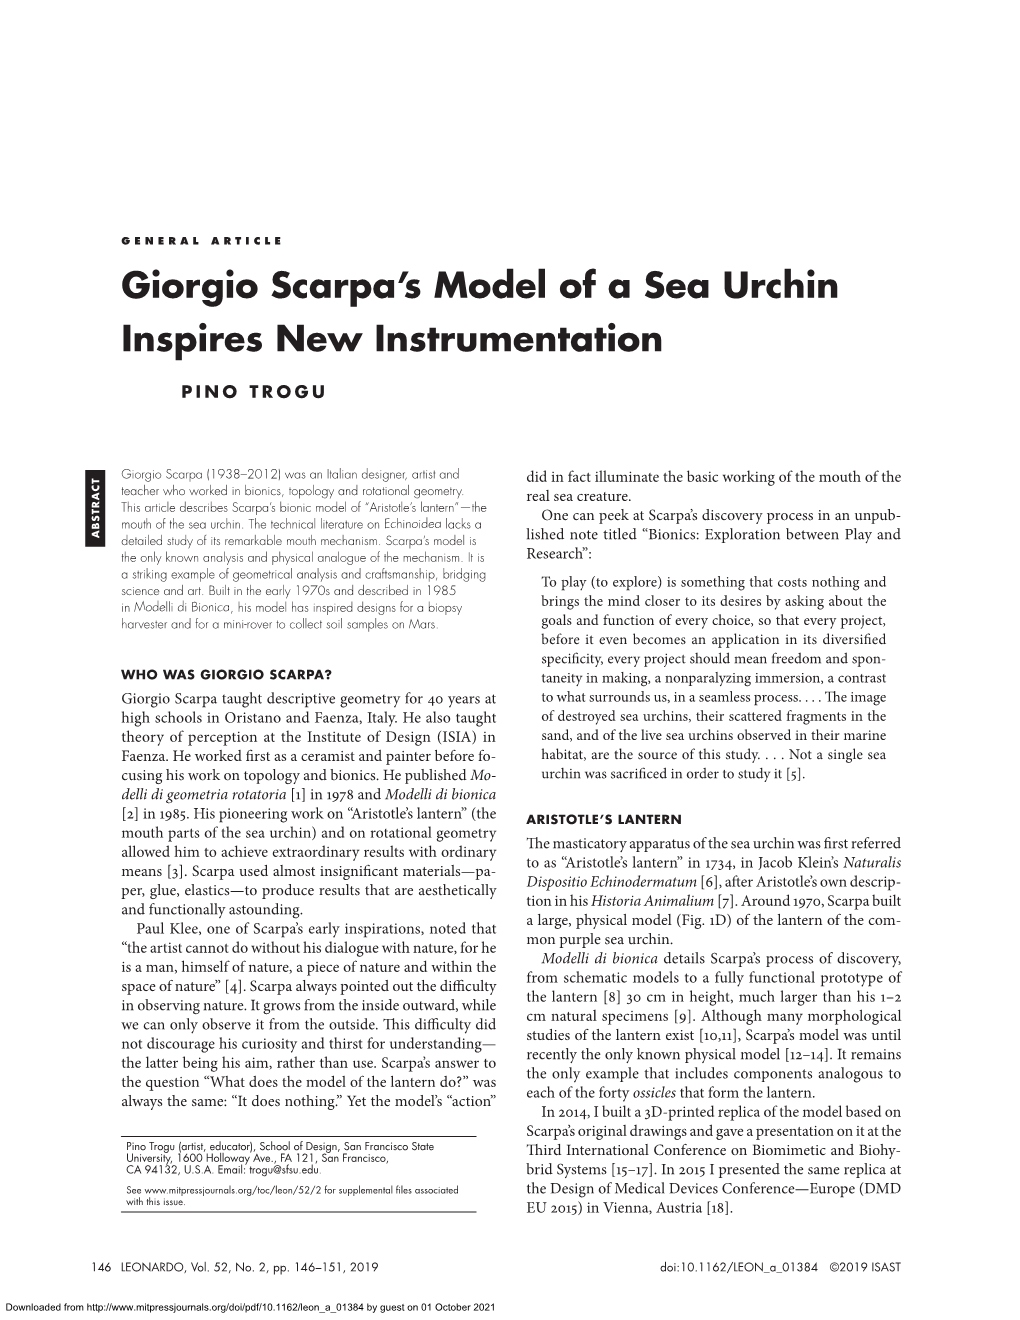 Giorgio Scarpa's Model of a Sea Urchin Inspires New Instrumentation